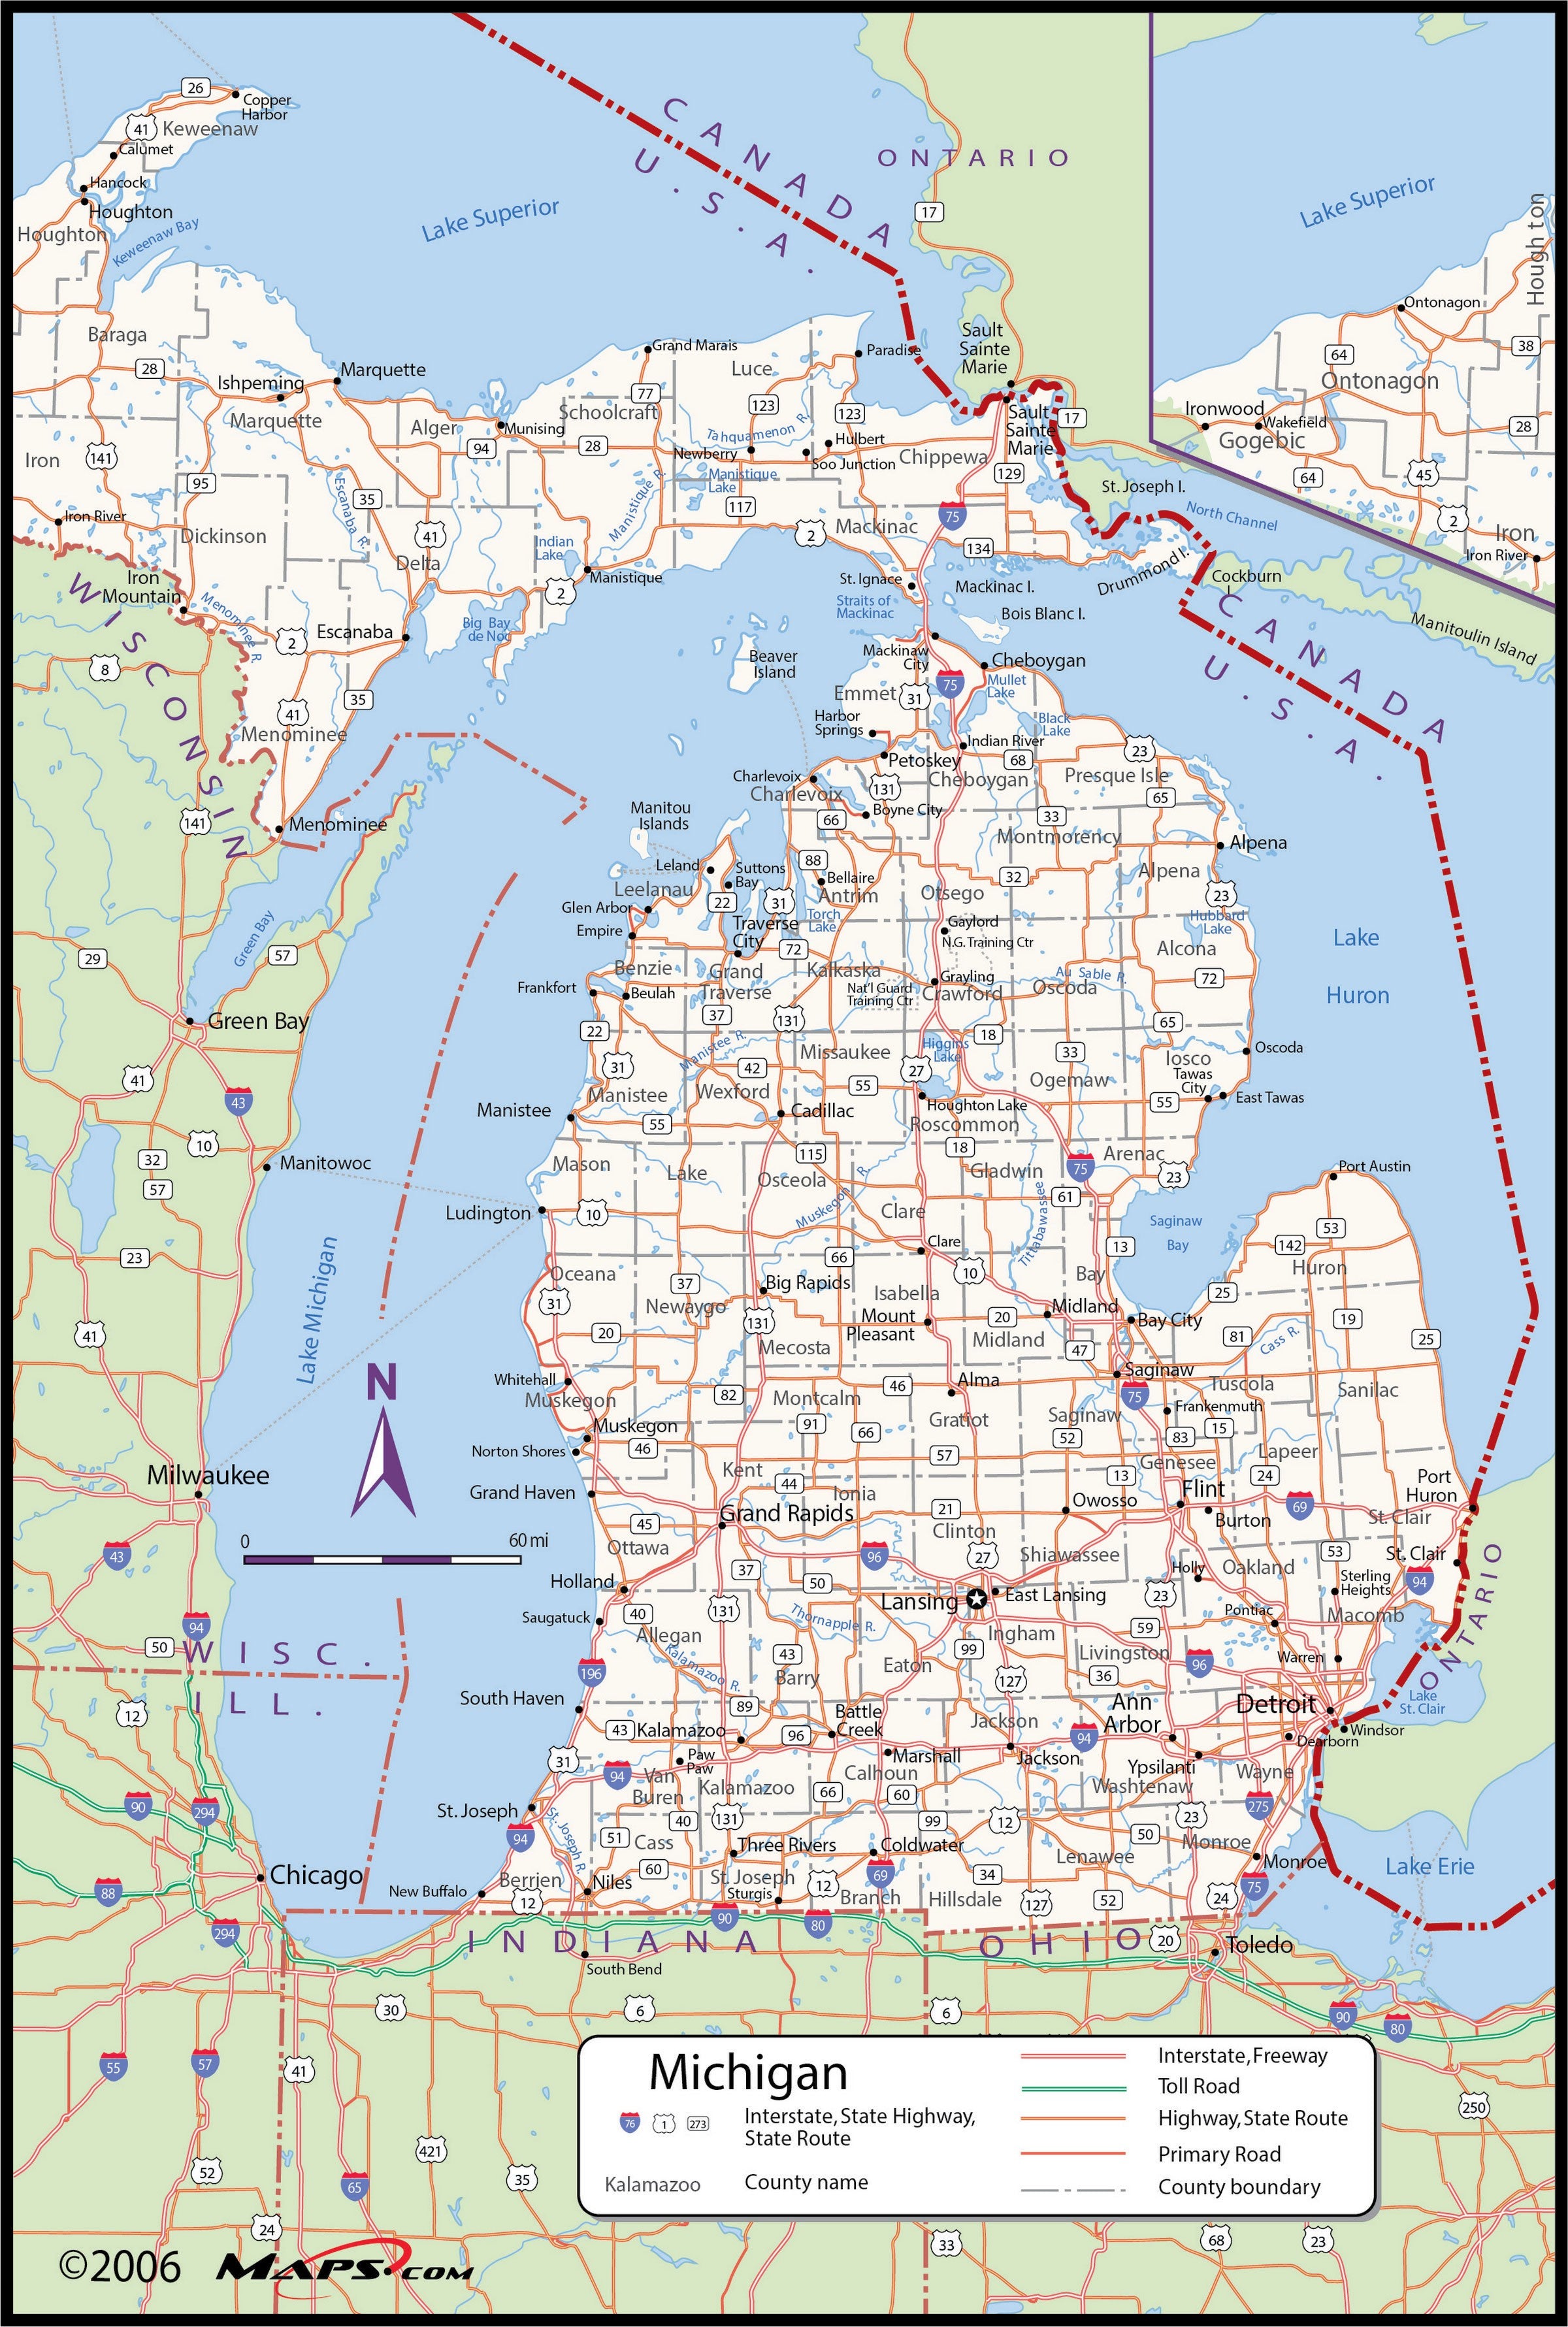 Map Of Michigan Counties Michigan County Wall Map | Maps.com.com